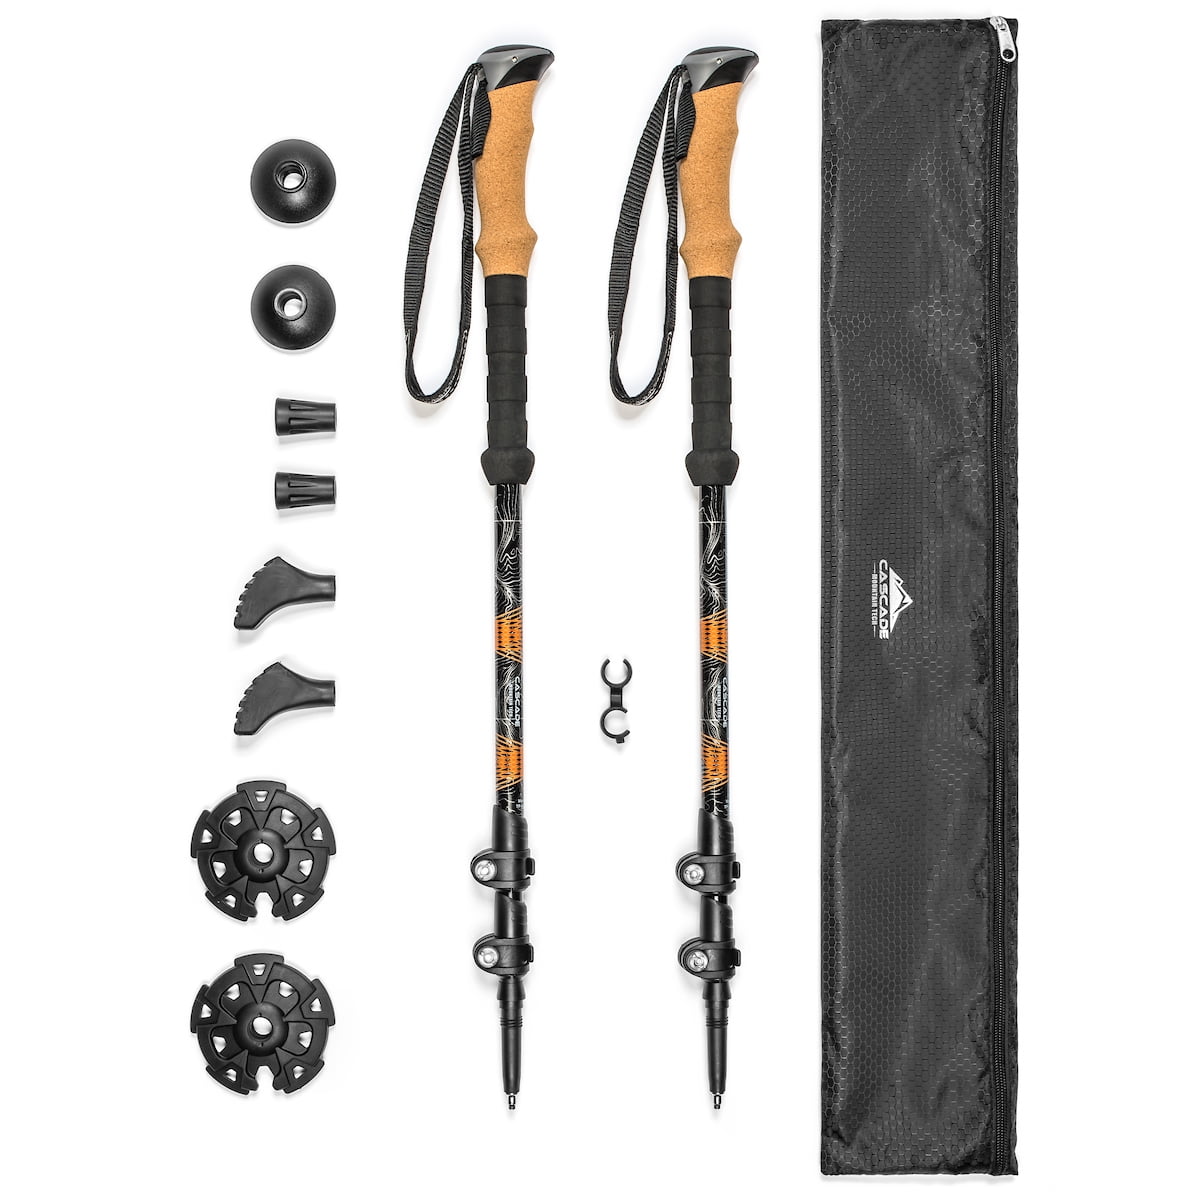 Smart Trekking Pole Multi-Purpose Hiking Stick Folding Hiking Pole for Camping